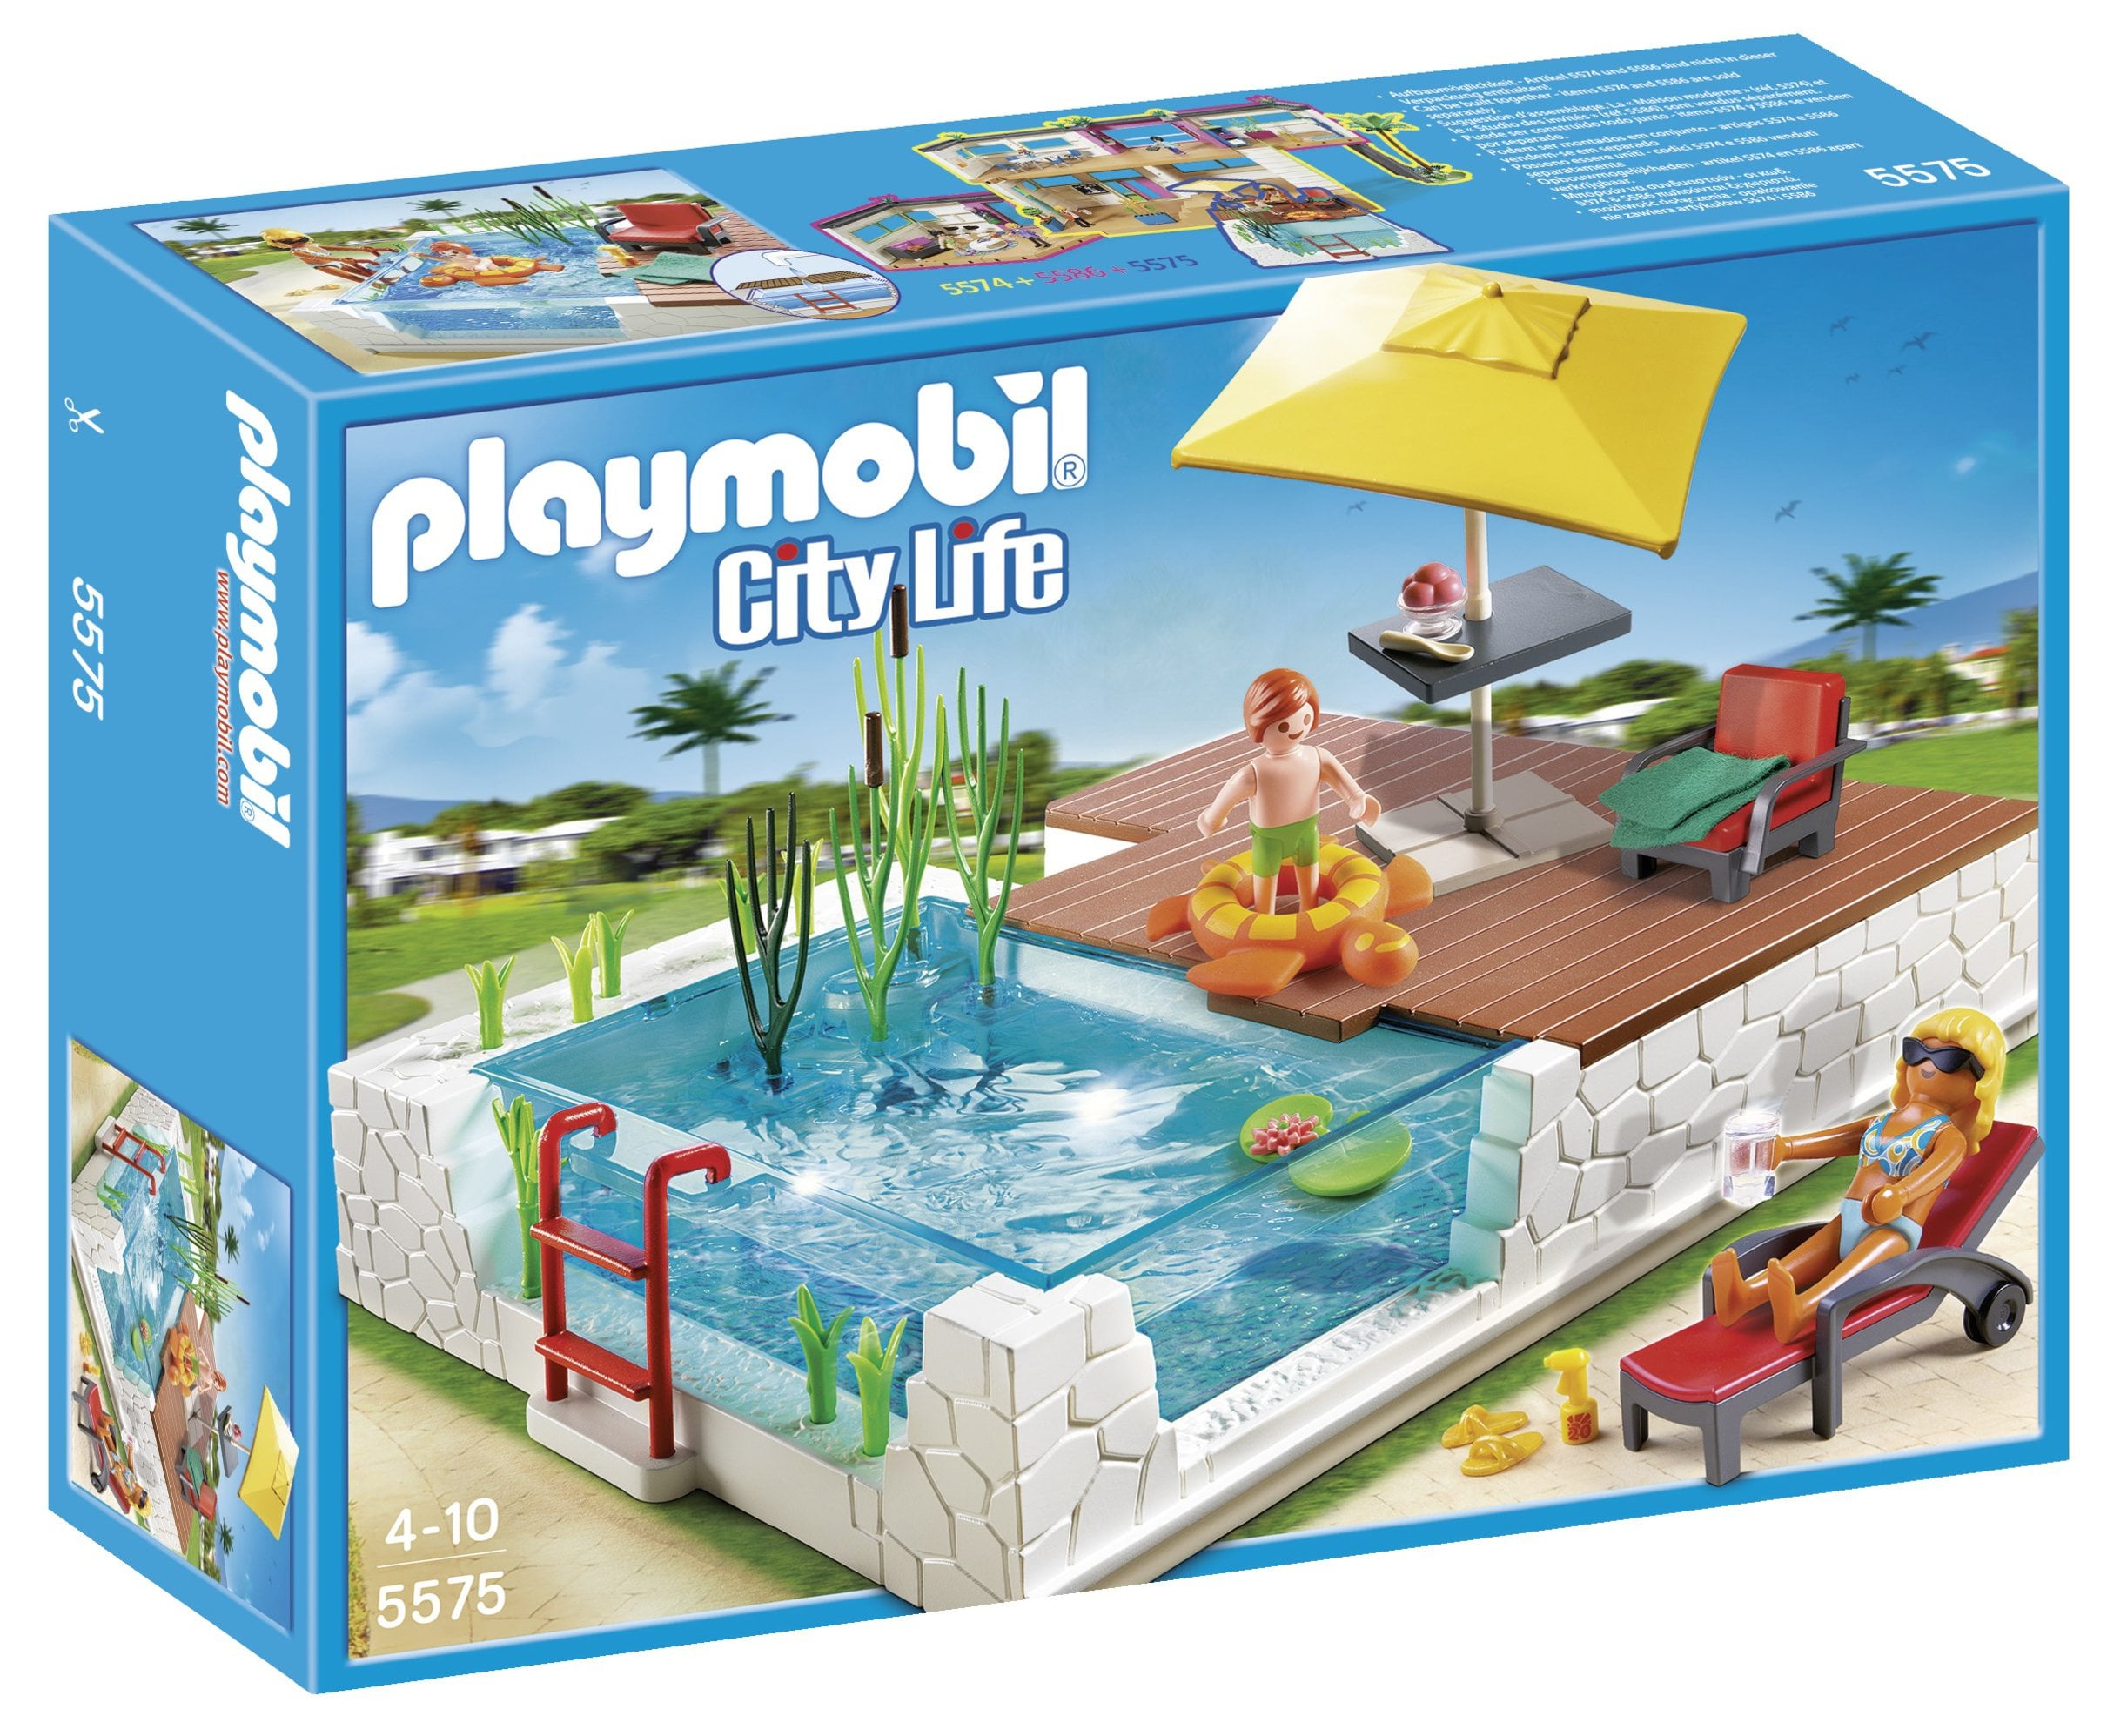 Details about   Playmobil Figurine Woman Bikini Swimsuit Beach Swimming Pool City Life Leisure 